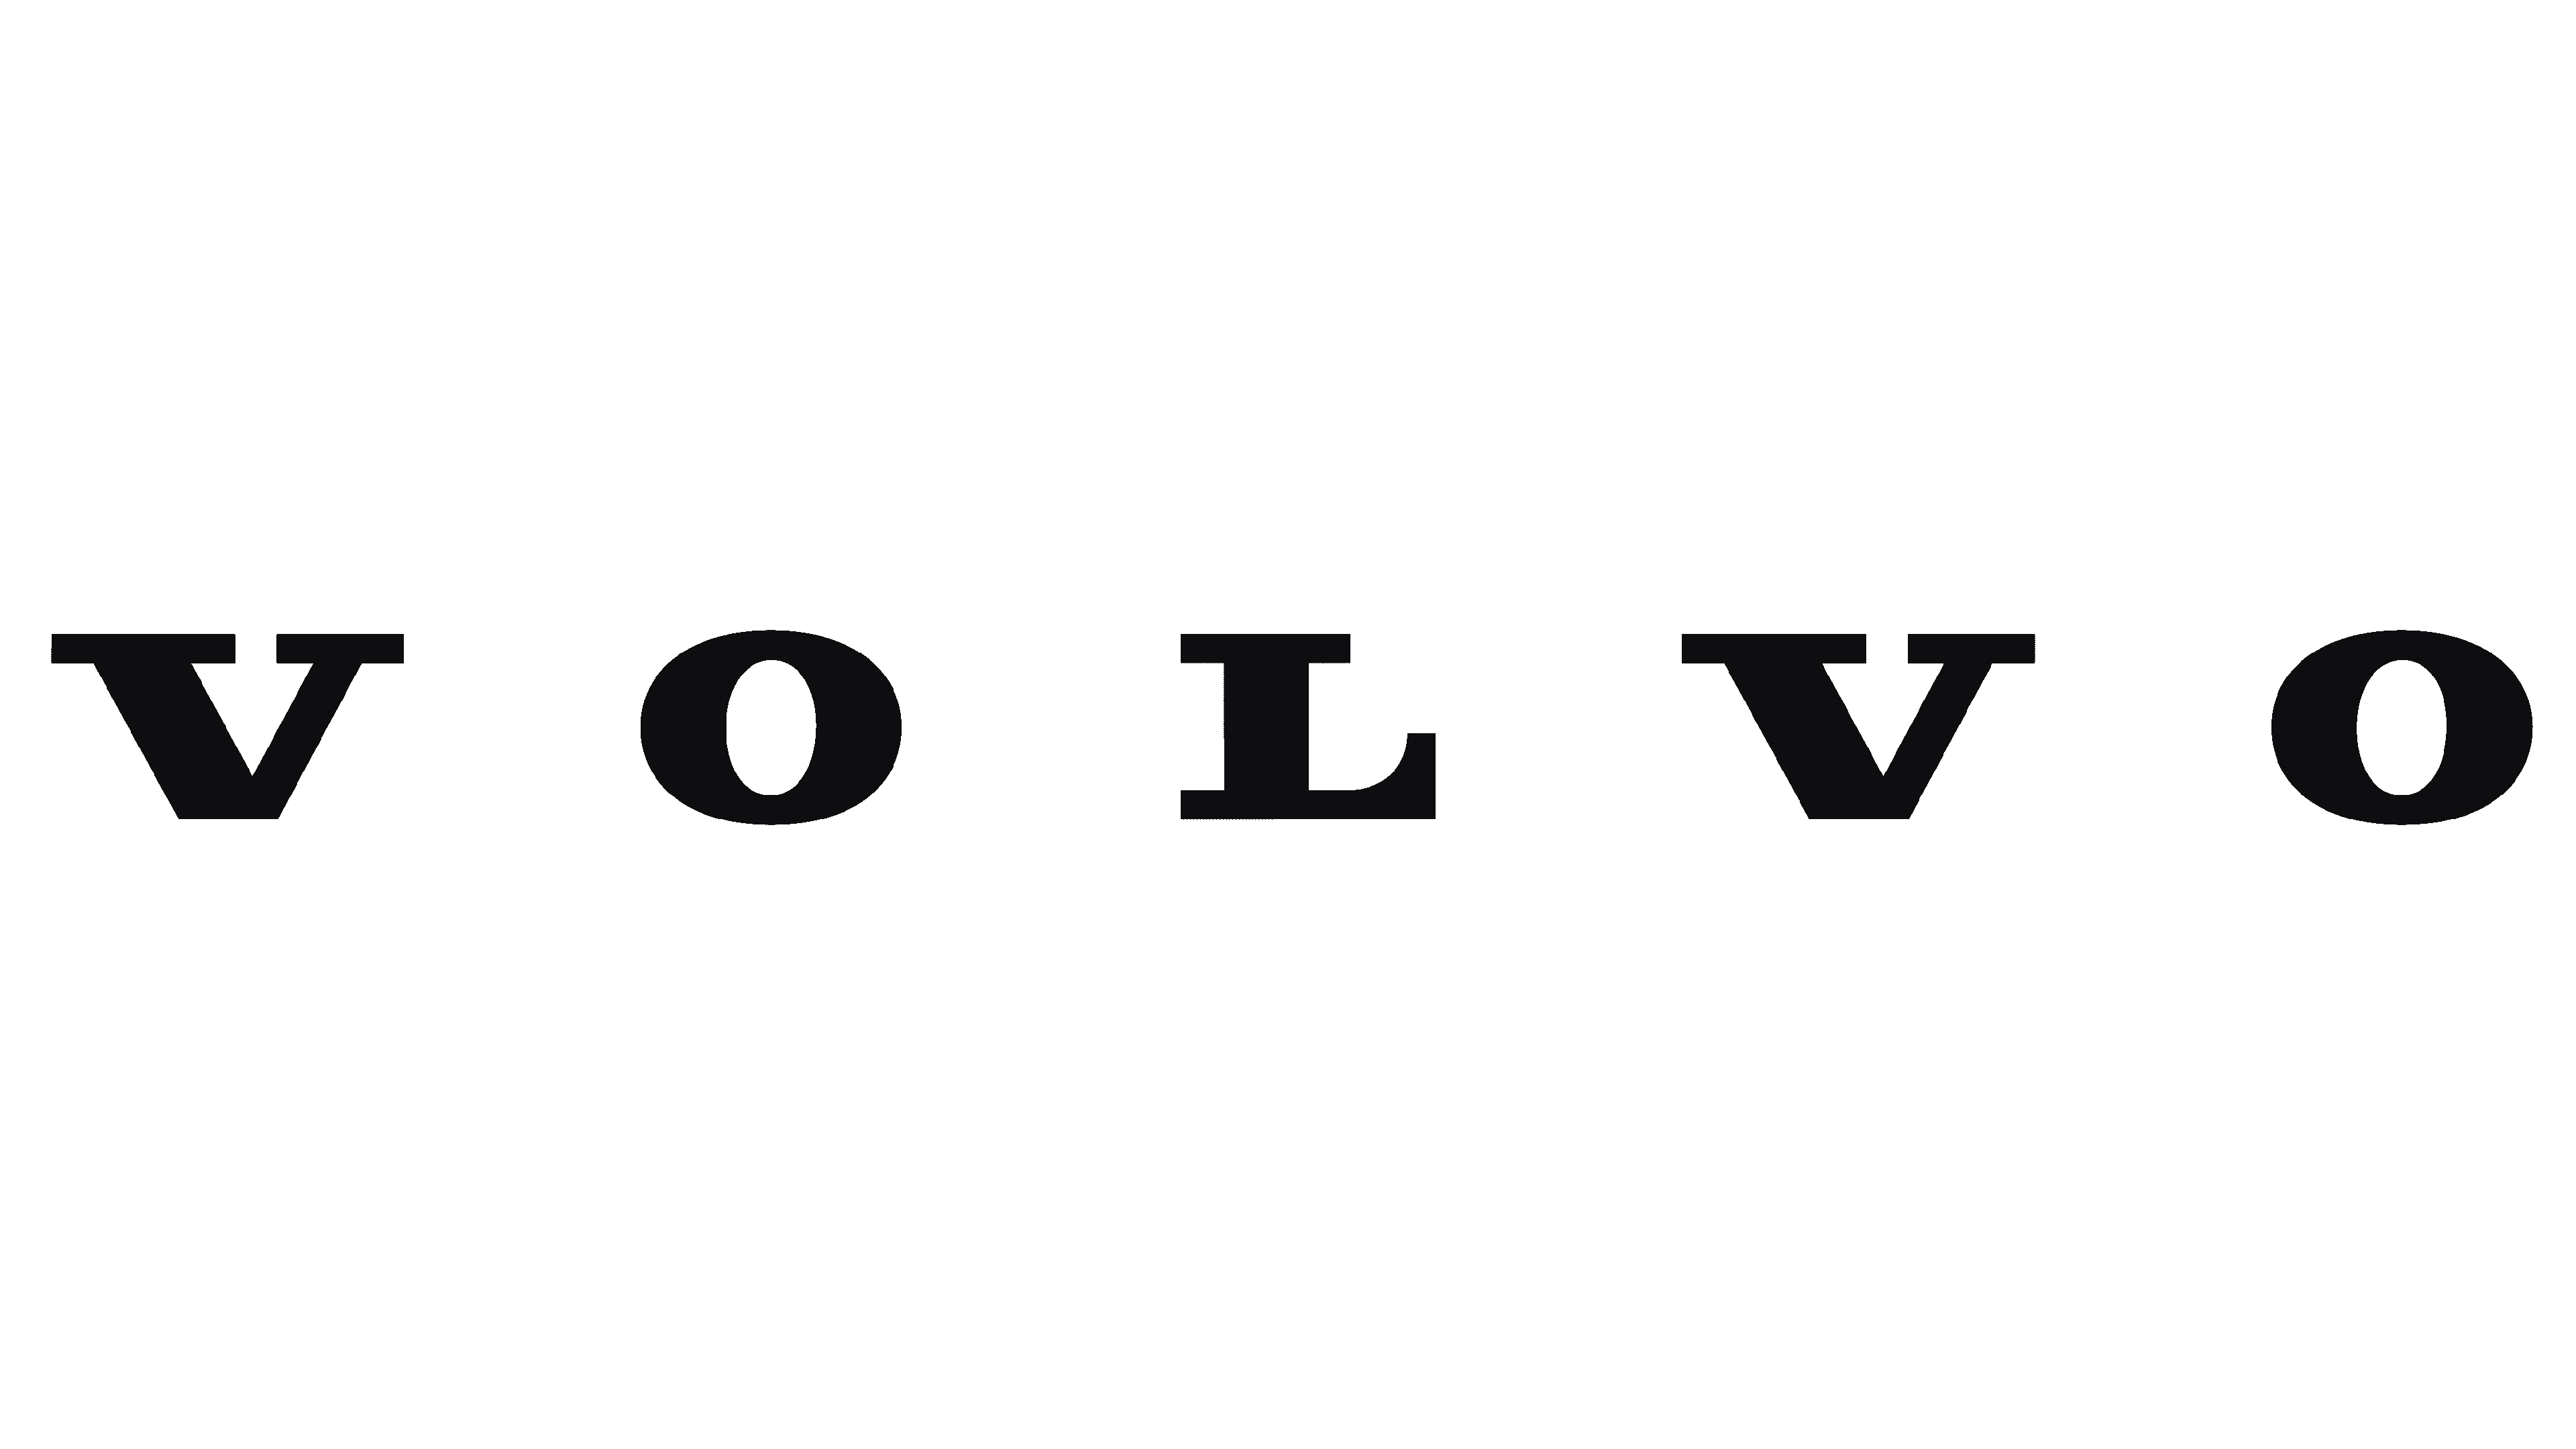 We received VOLVO approval! - YUKO news